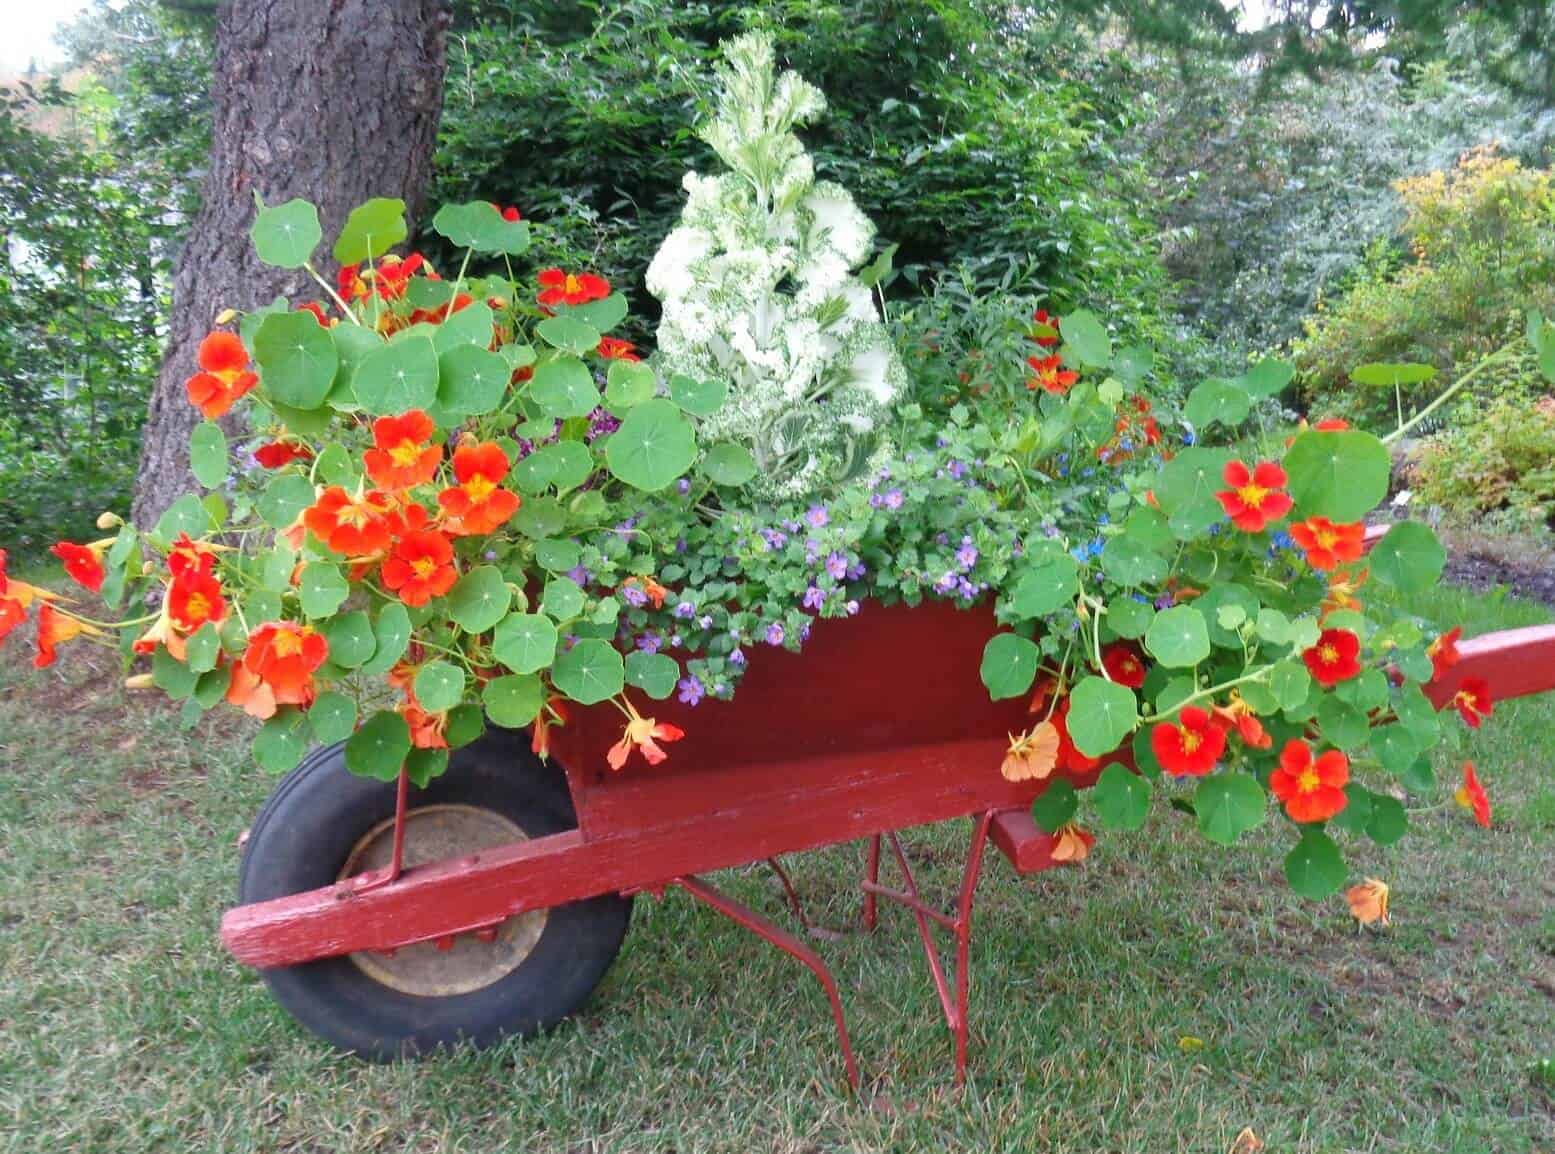 ontainer Gardening Ideas - Old Wheelbarrow planter - nasturtiums